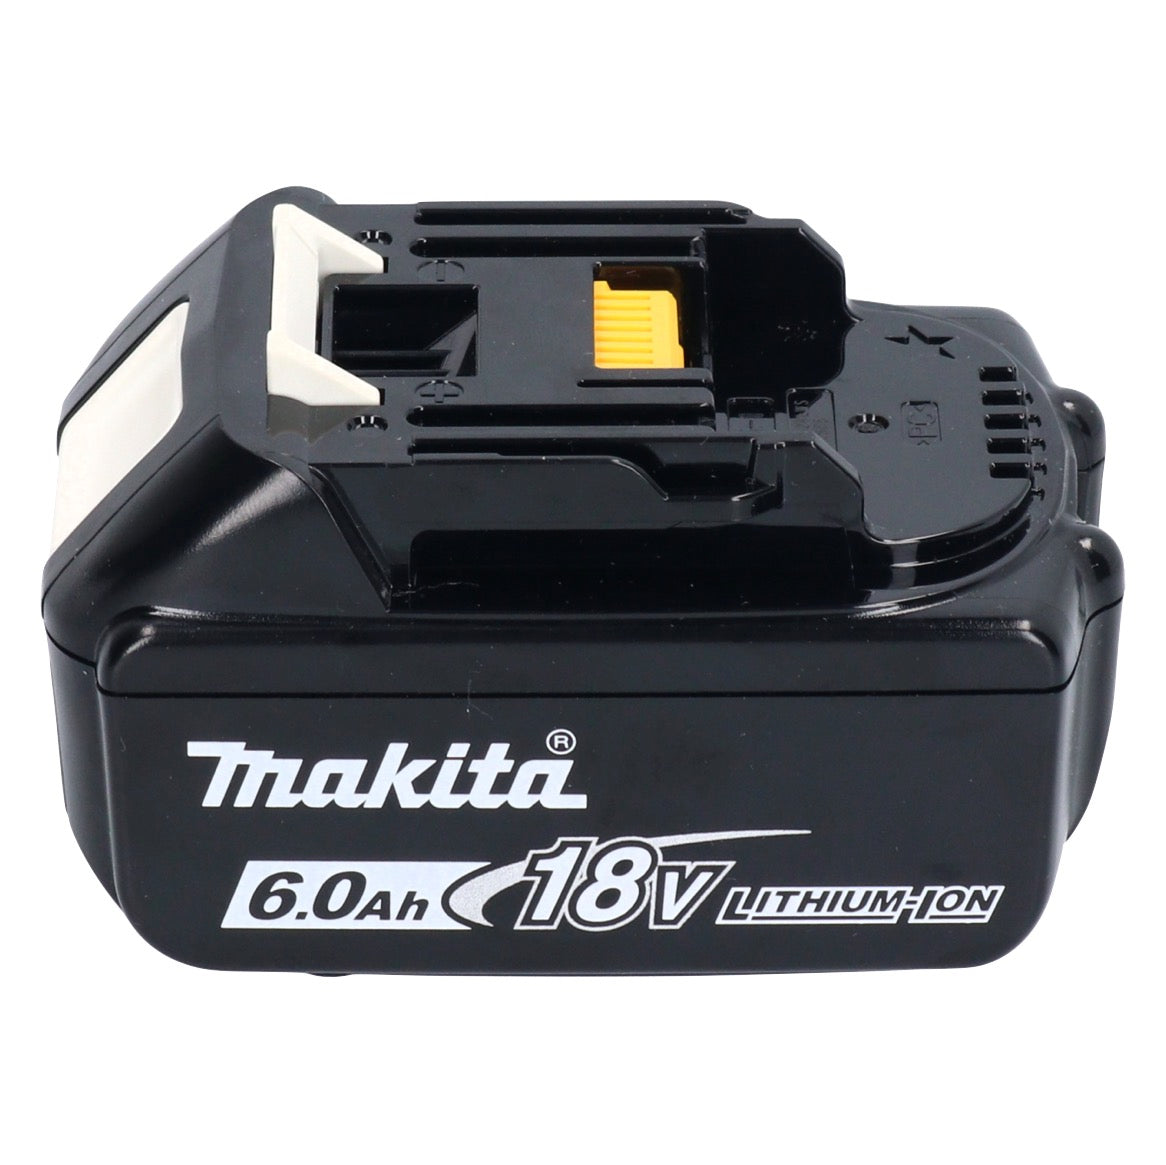 Makita DHP 489 G1J Akku Schlagbohrschrauber 18 V 73 Nm Brushless + 1x Akku 6,0 Ah + Makpac - ohne Ladegerät